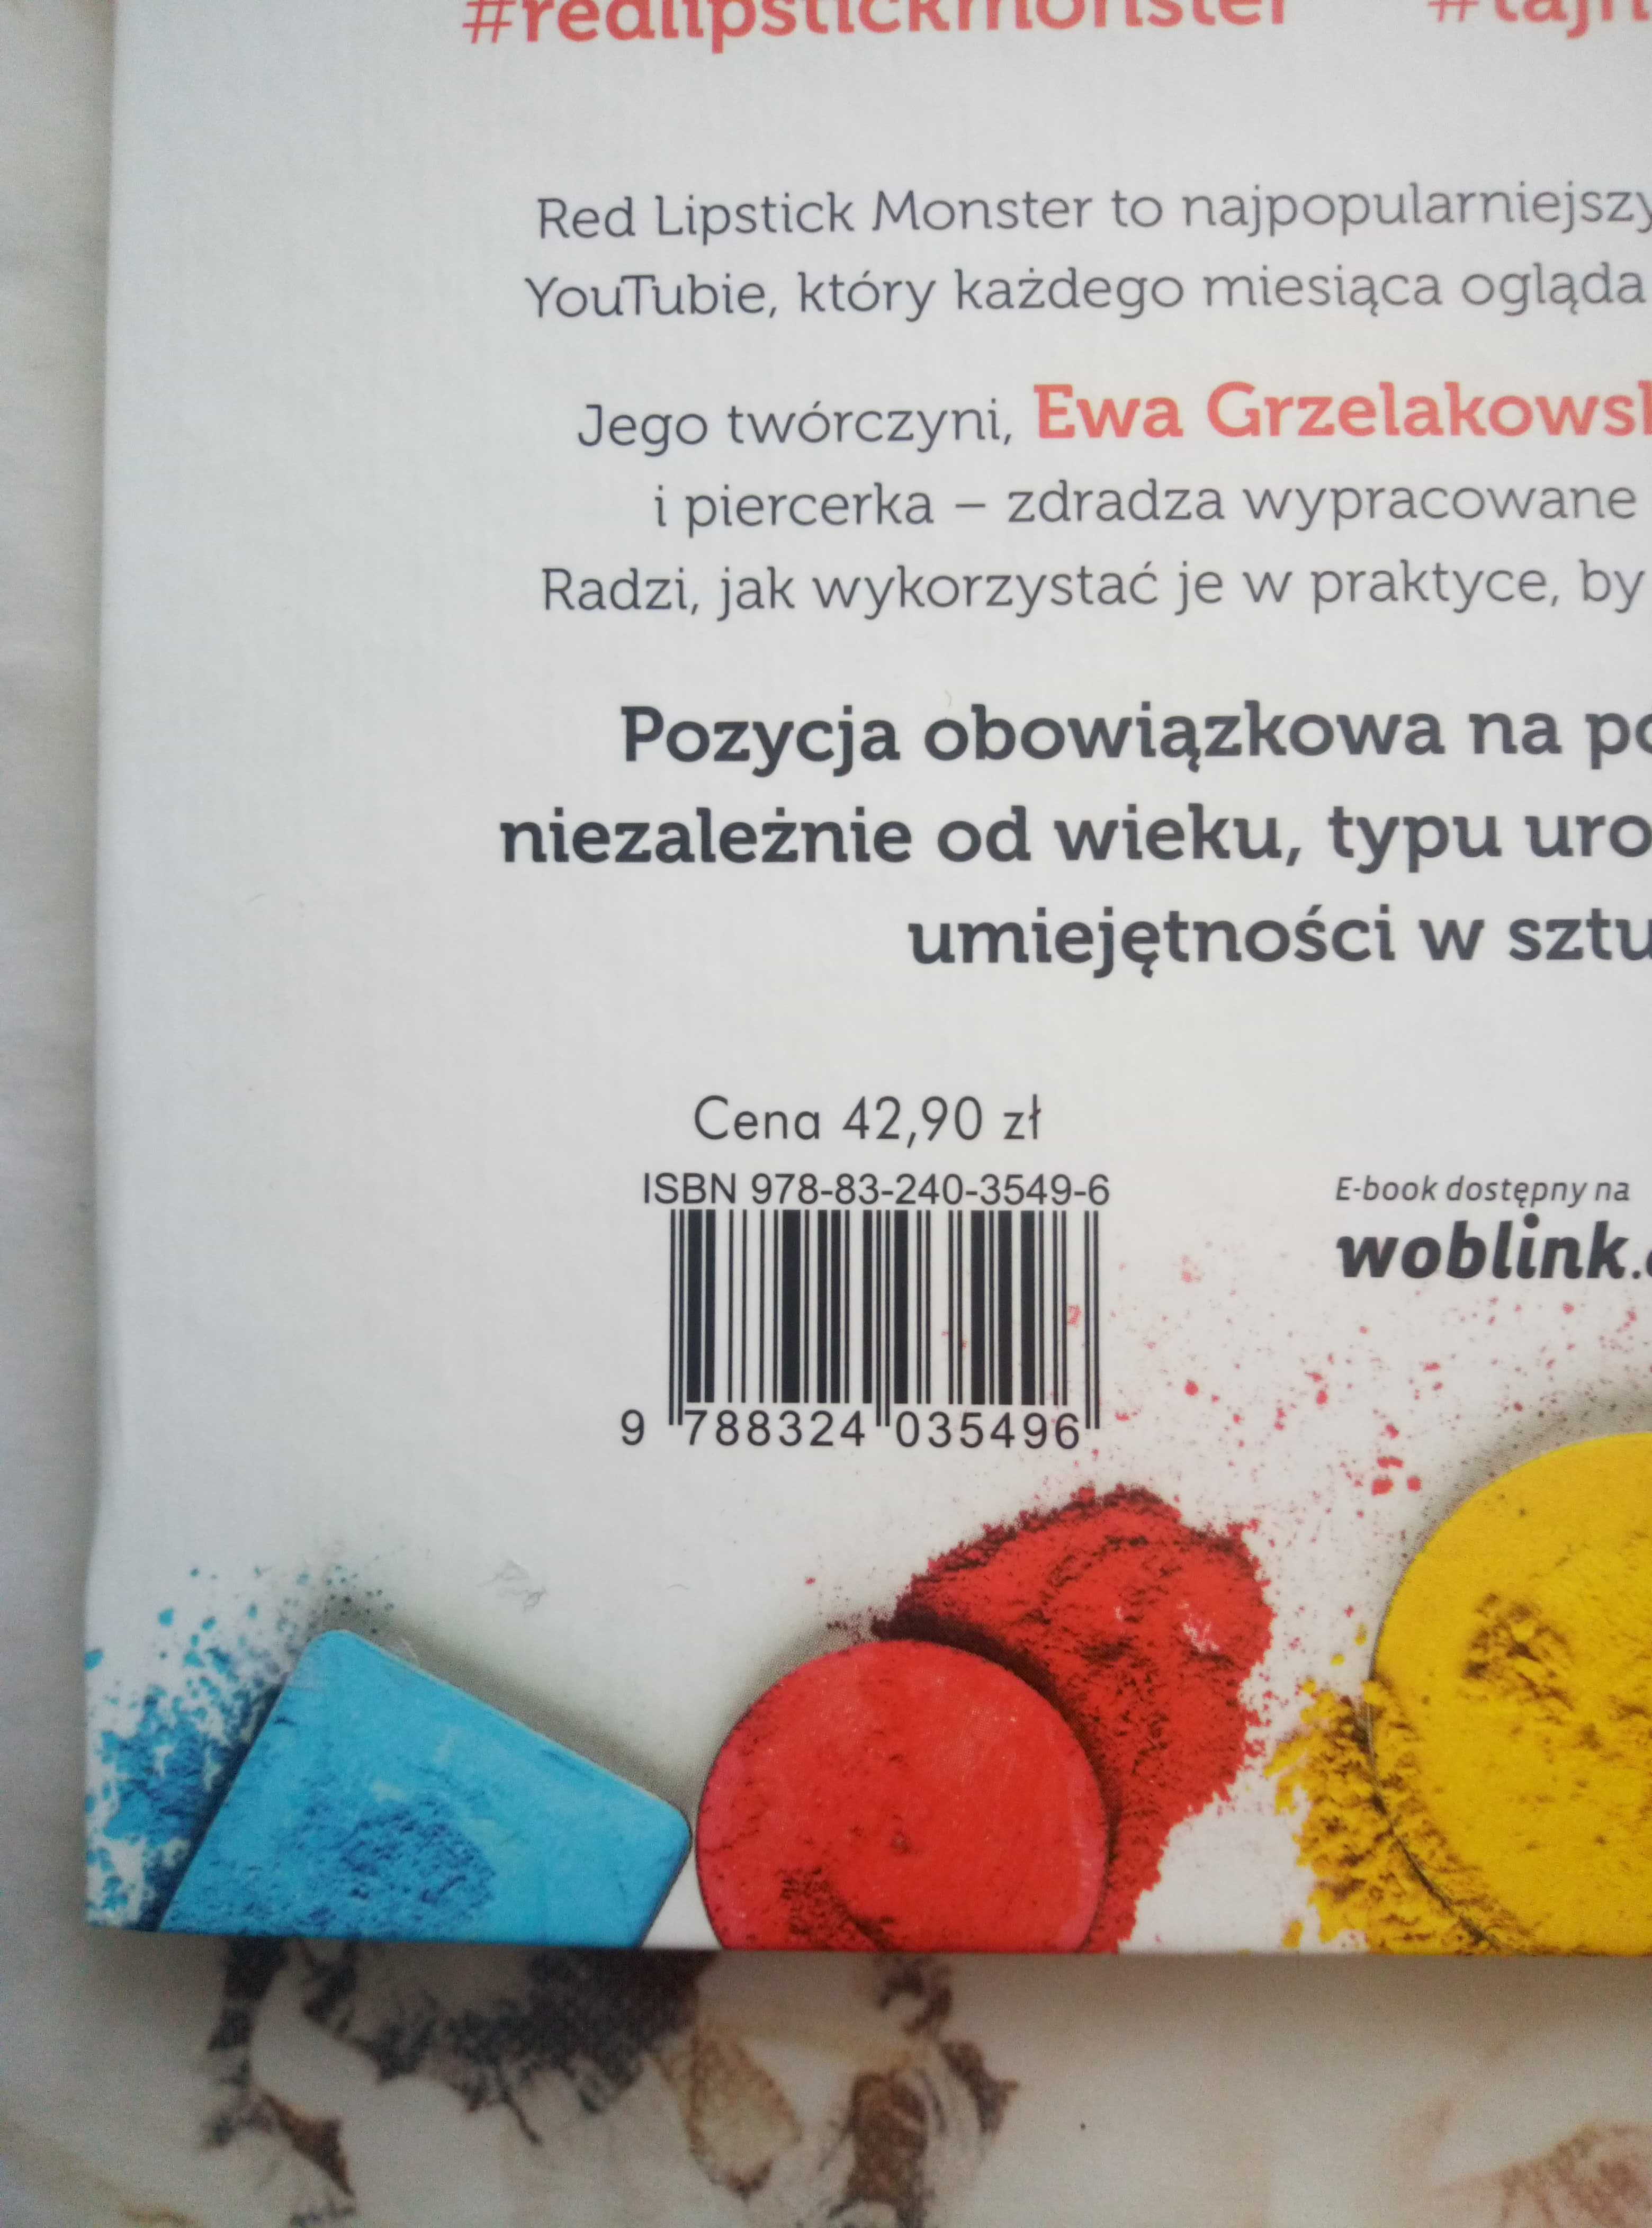 Tajniki makijażu Red Lipstick Monster Ewa Grzelakowska-Kostoglu